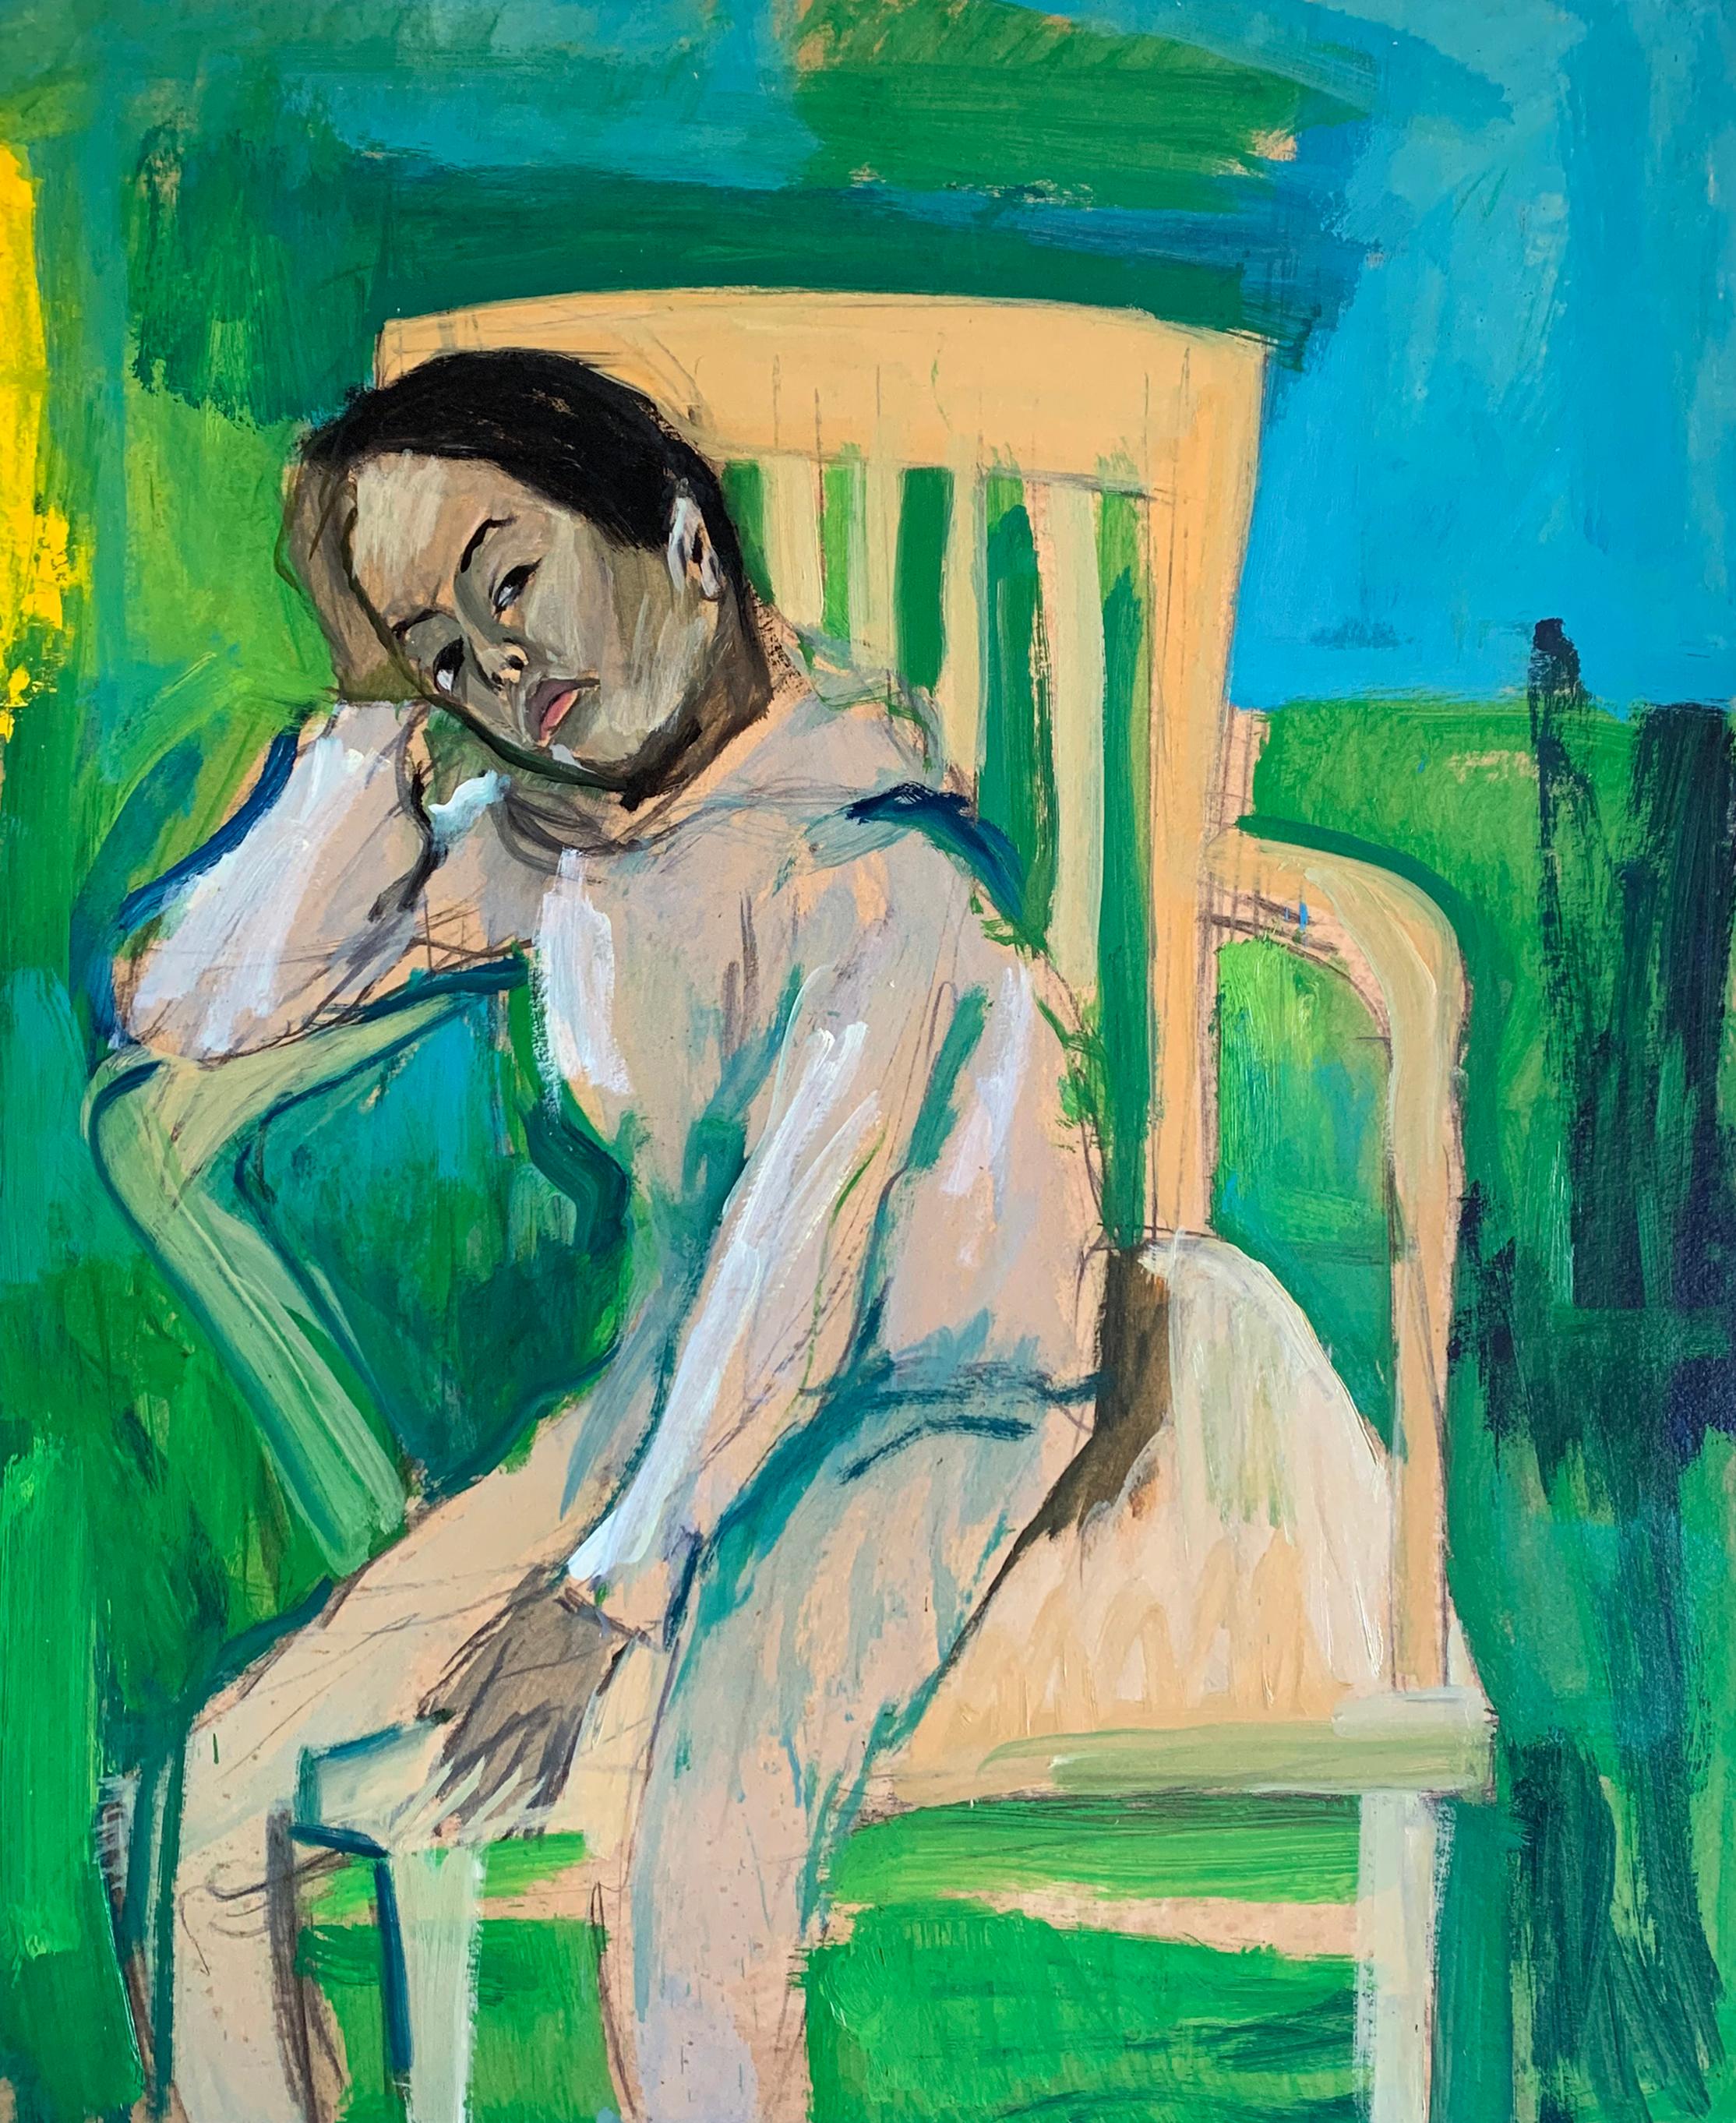 Bernard Harmon Figurative Painting - Child Resting in Chair, Expressionist Portrait by Philadelphia Artist